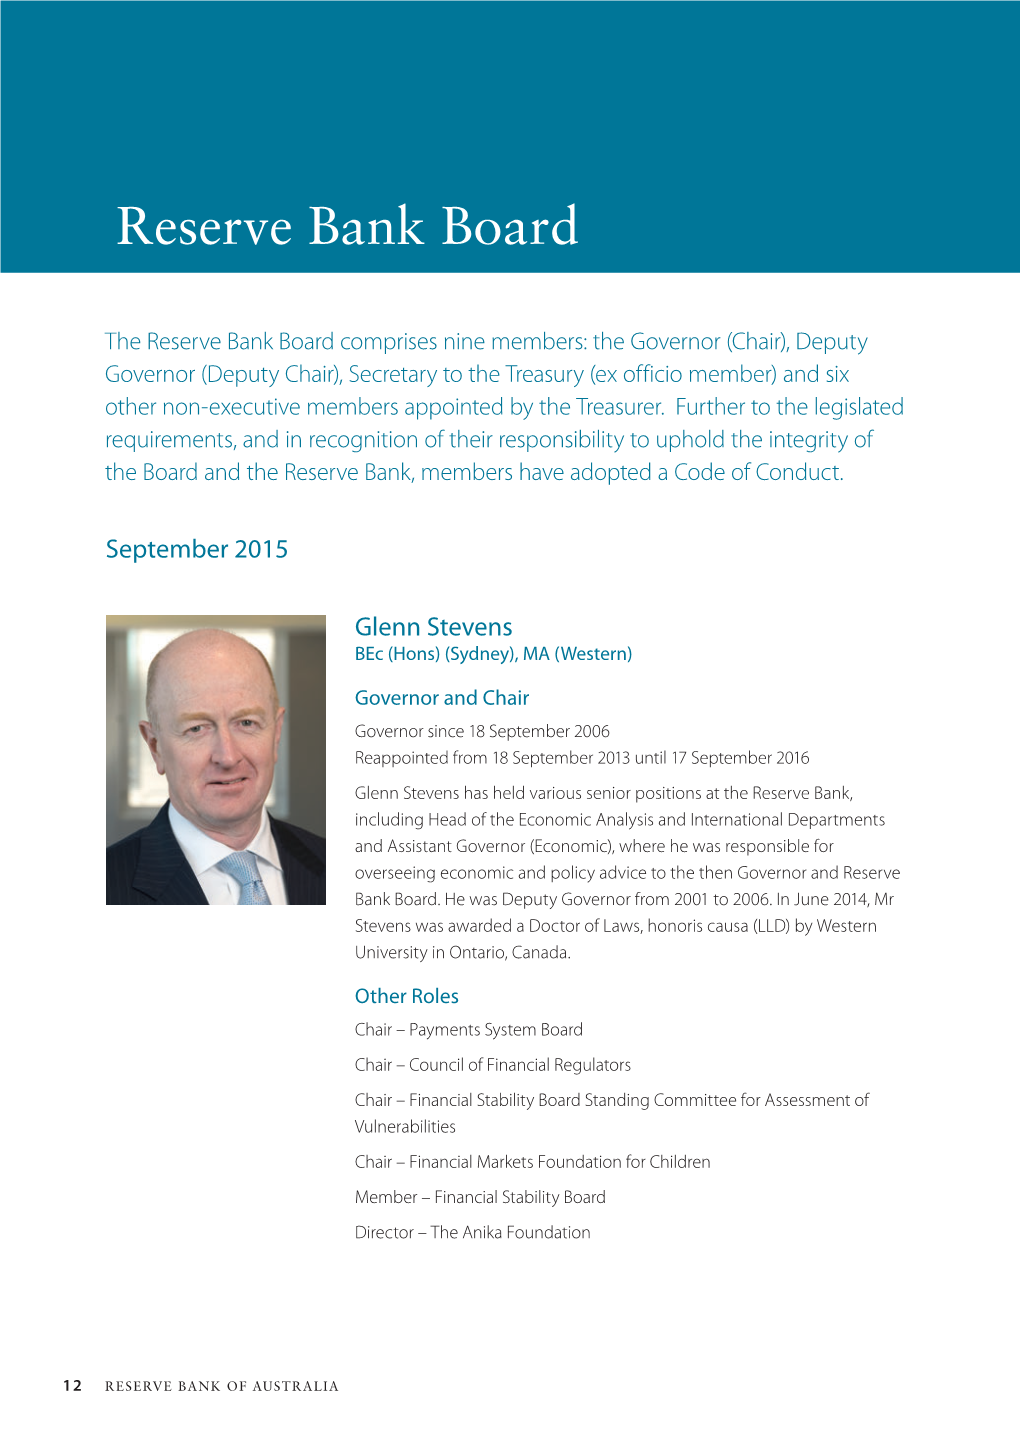 Reserve Bank of Australia Annual Report 2015